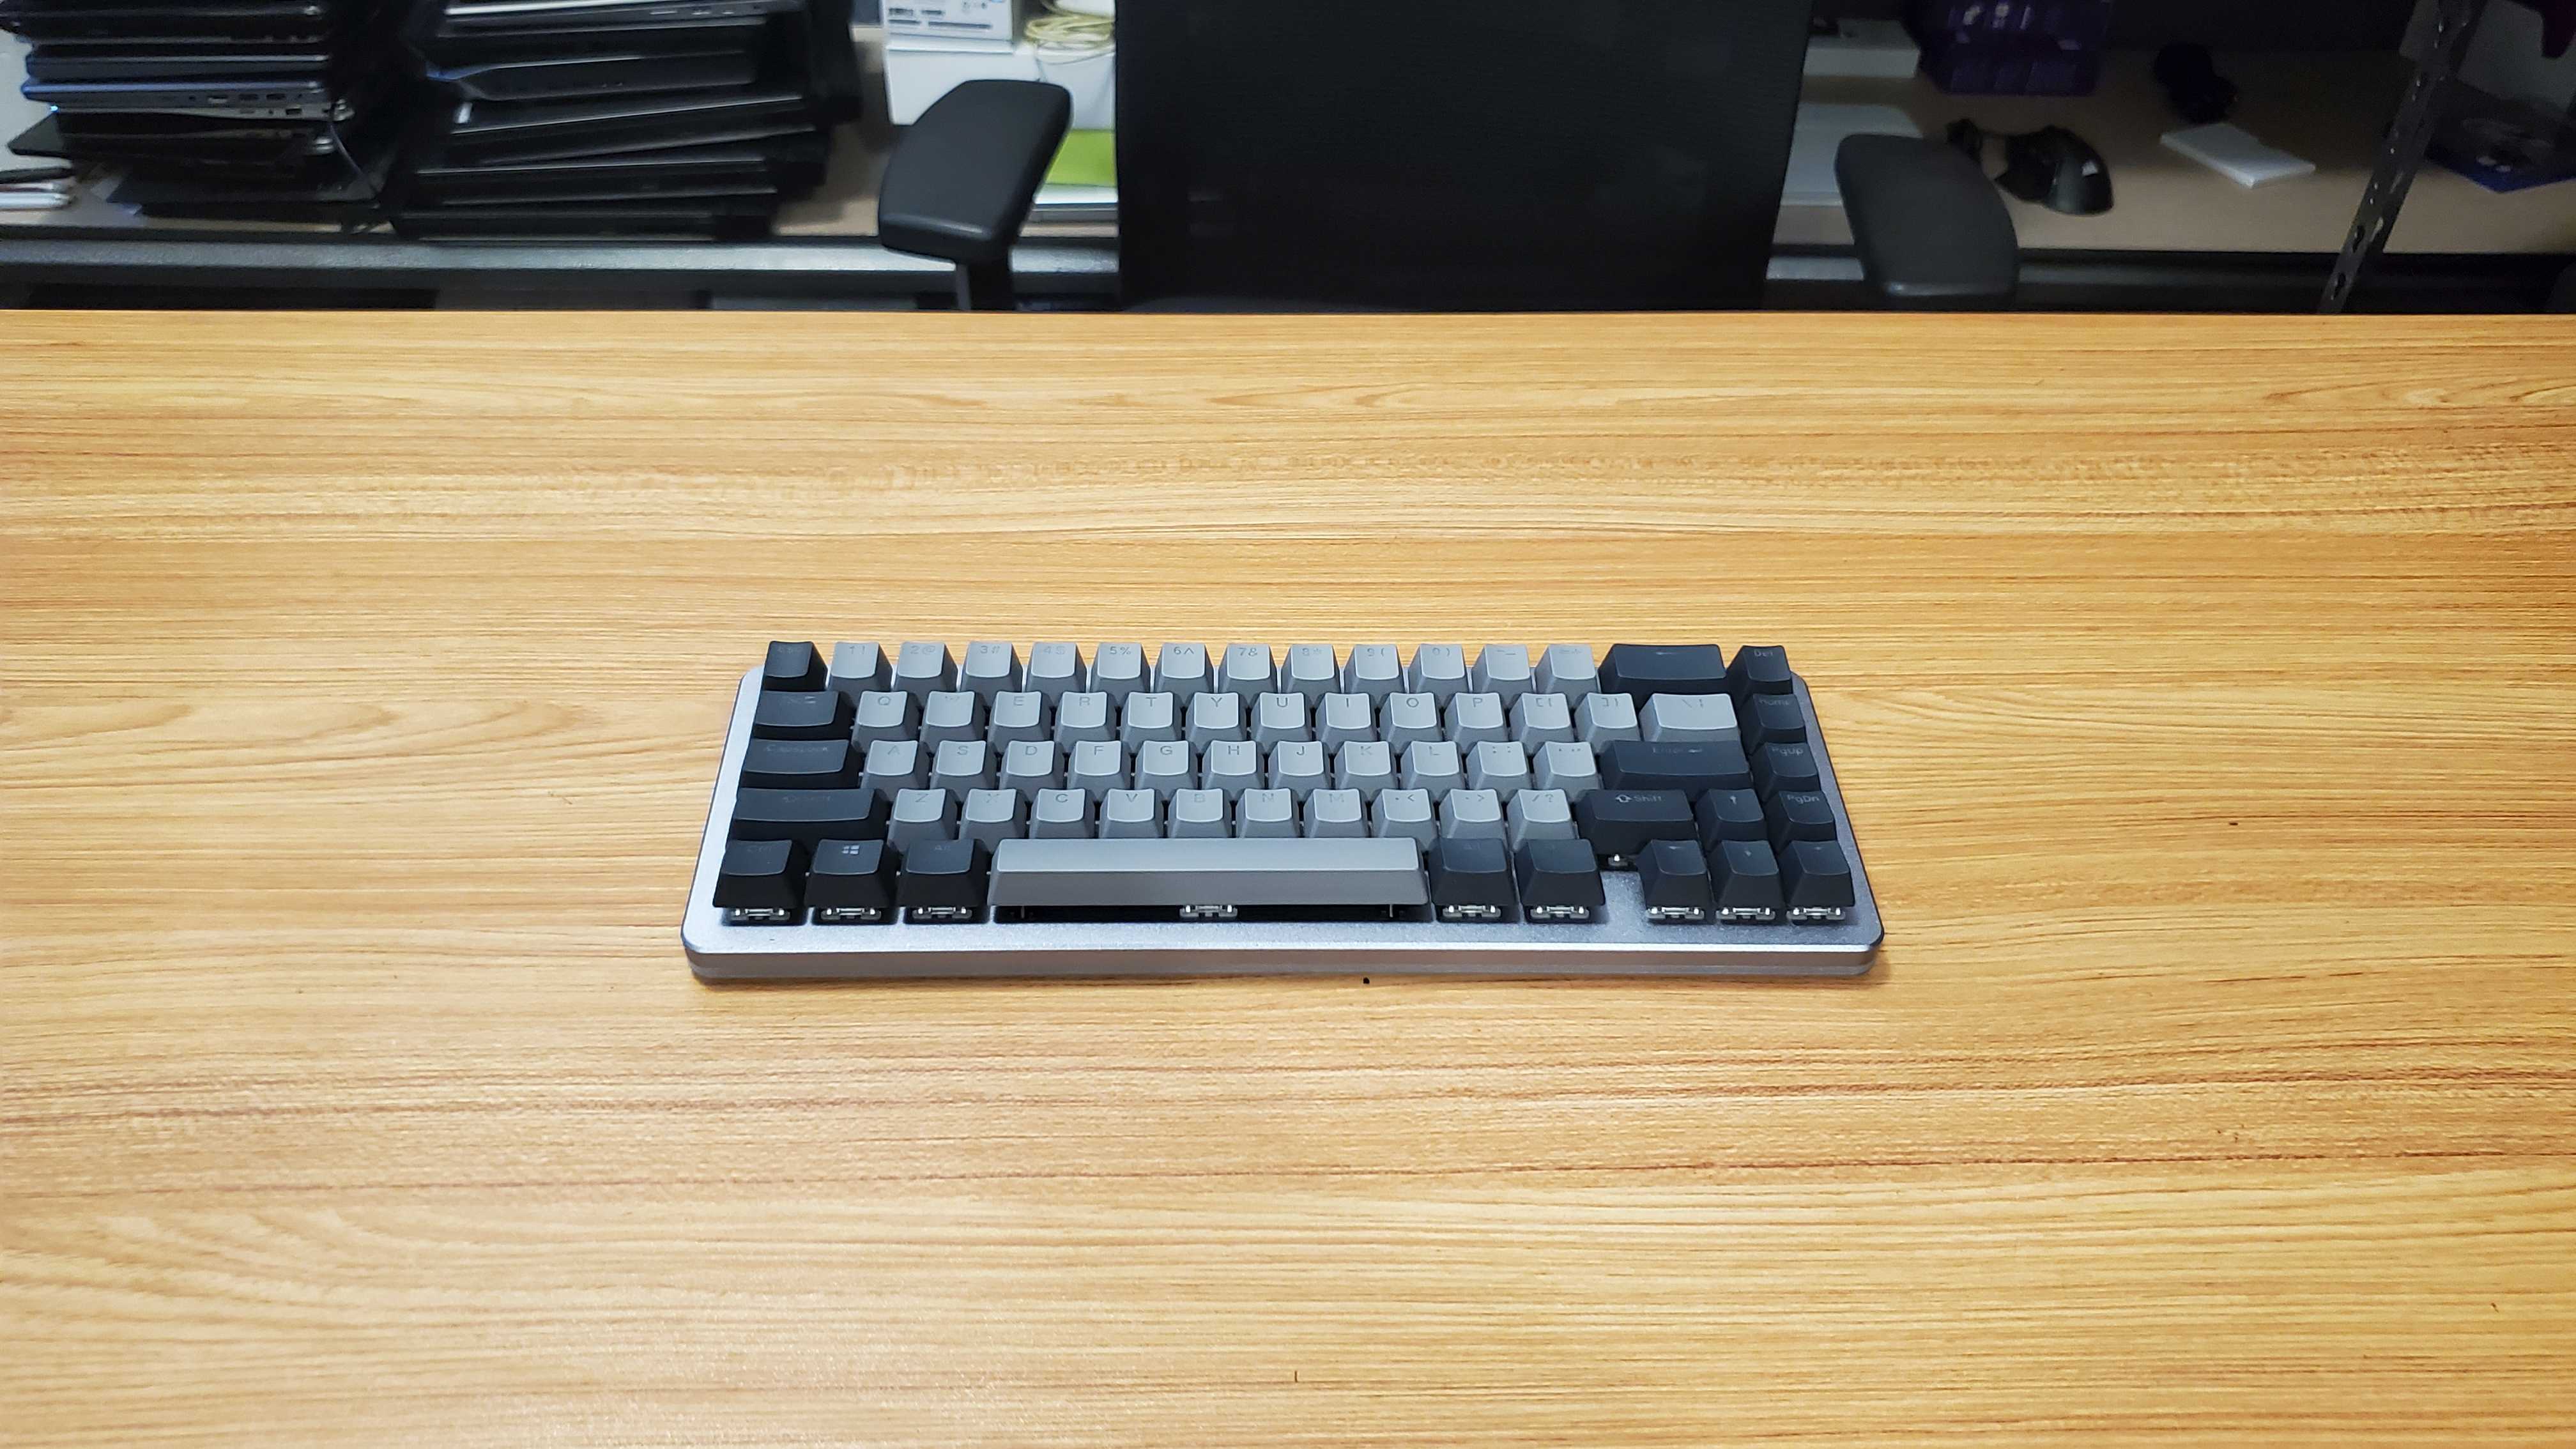 grey Drop ALT mechanical keyboard